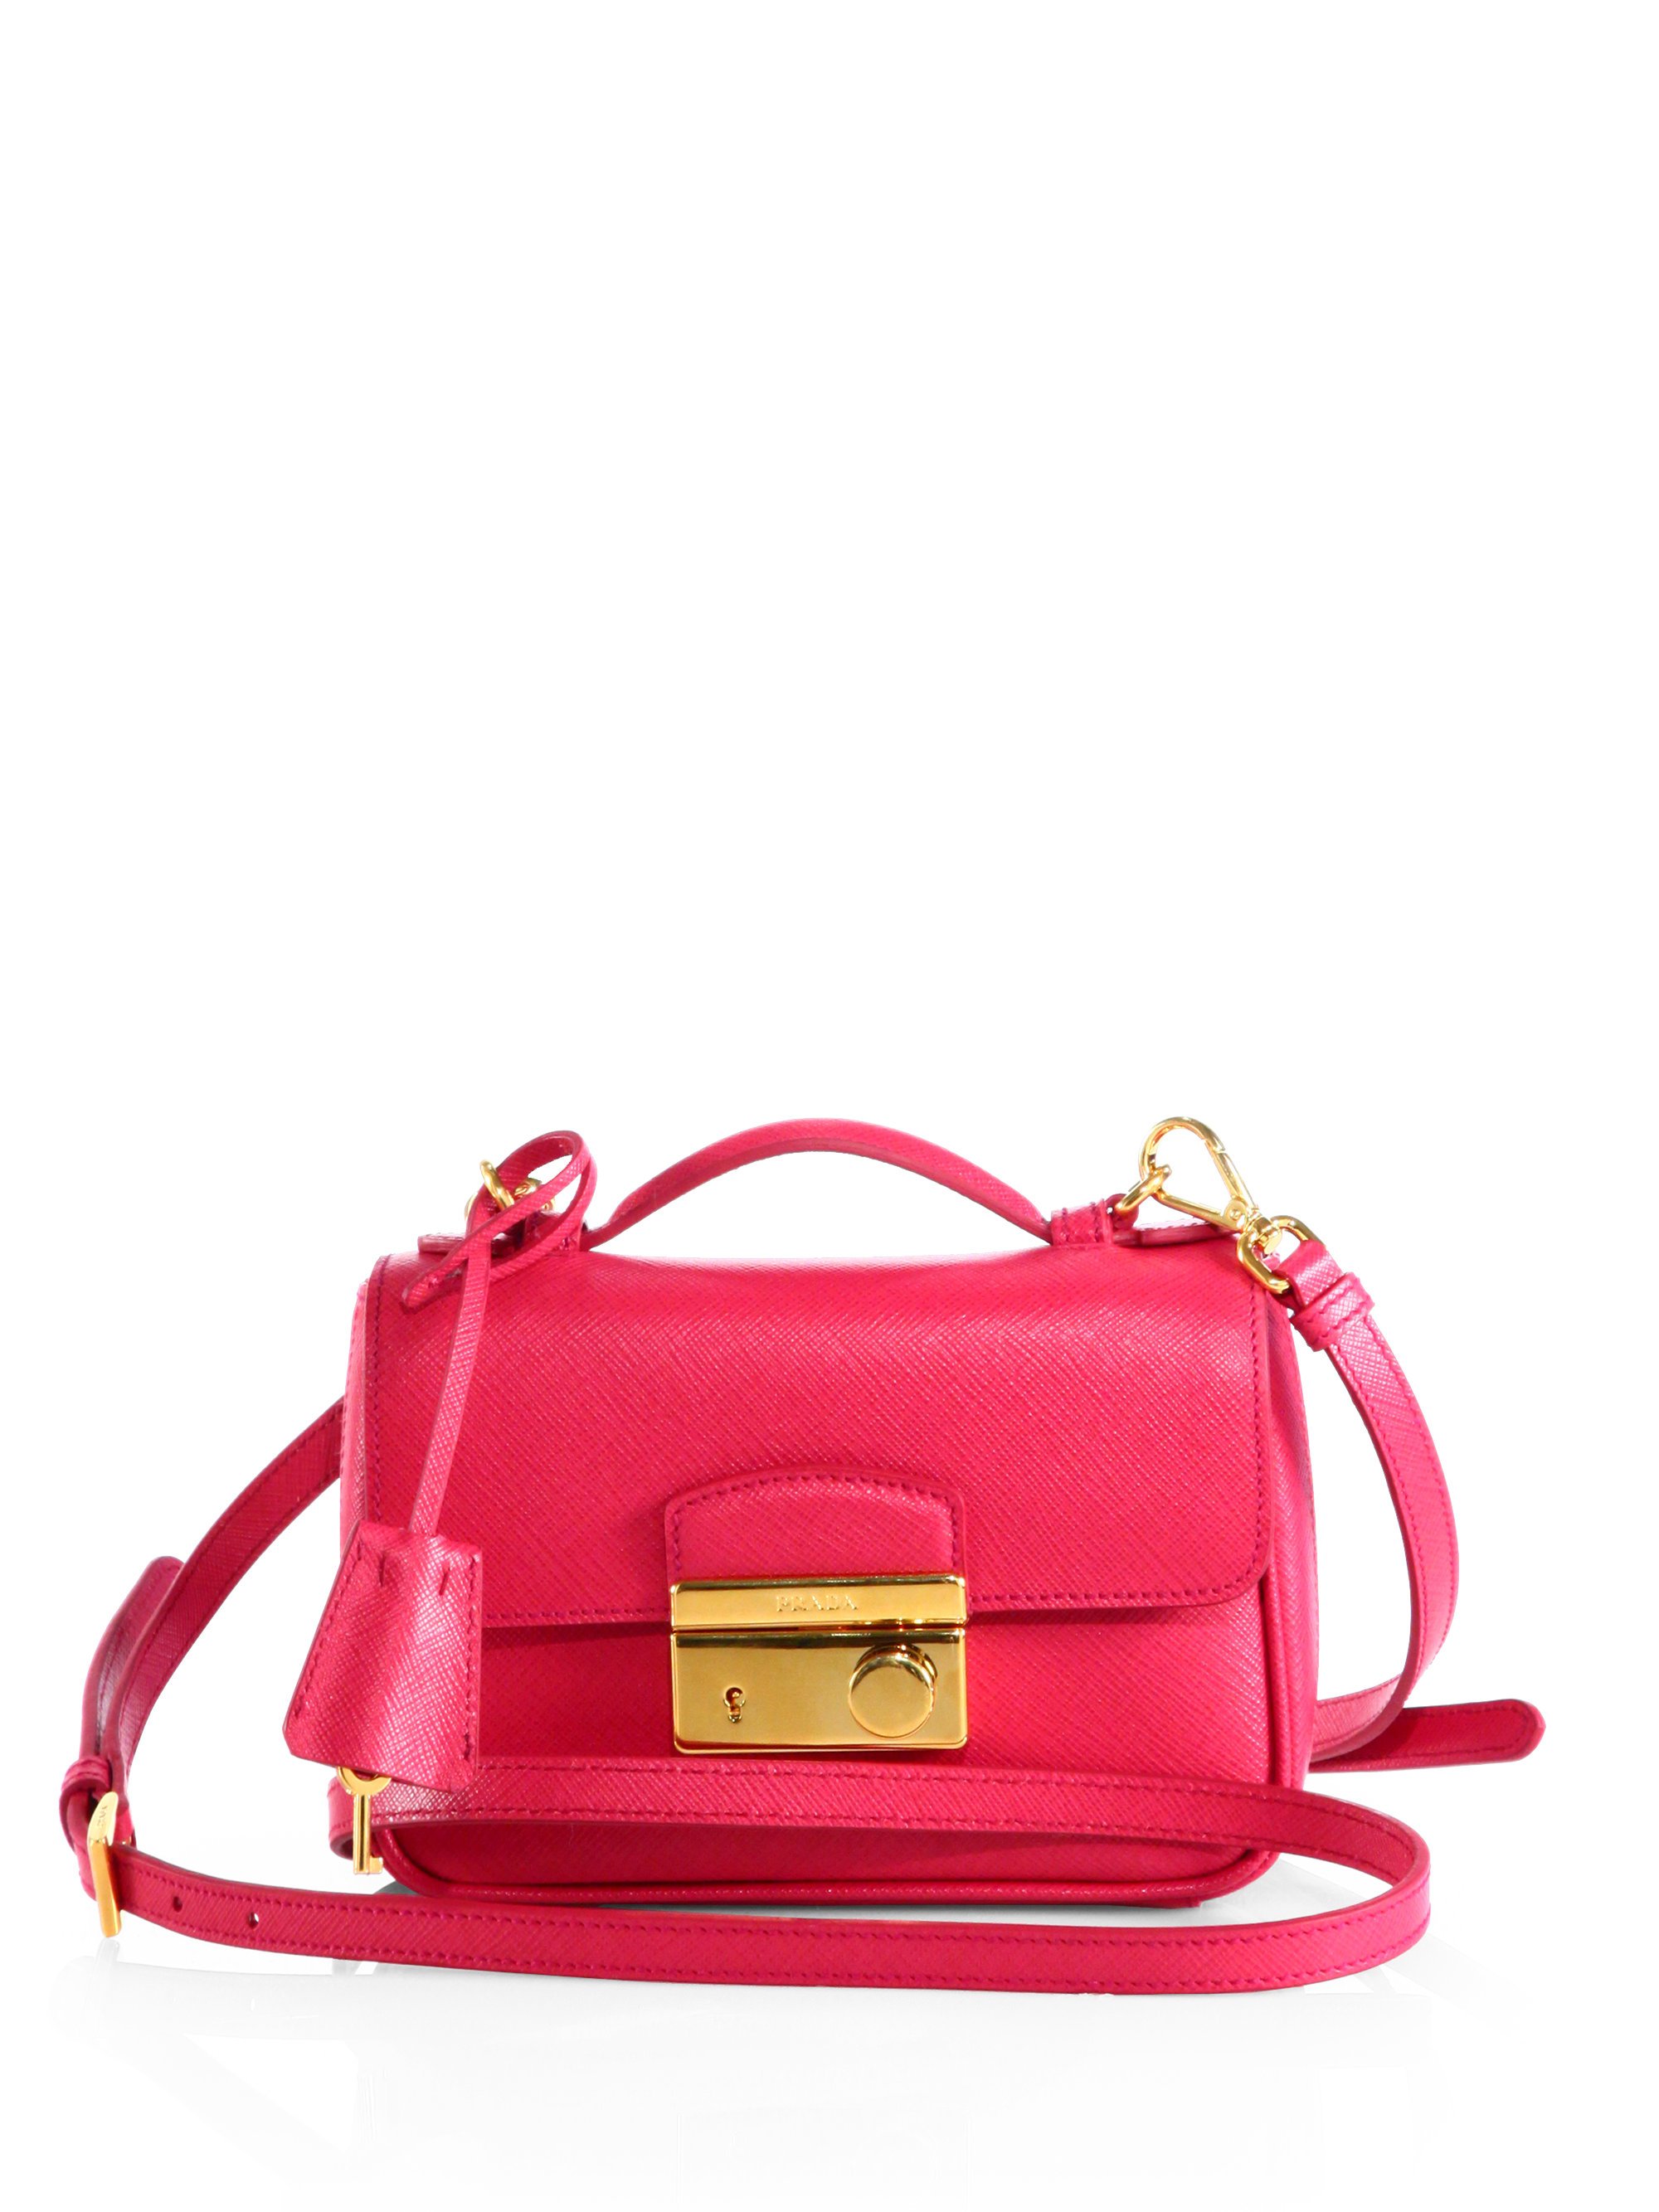 Prada Saffiano Leather Mini Flap Crossbody Bag in Pink (PEONIA) | Lyst